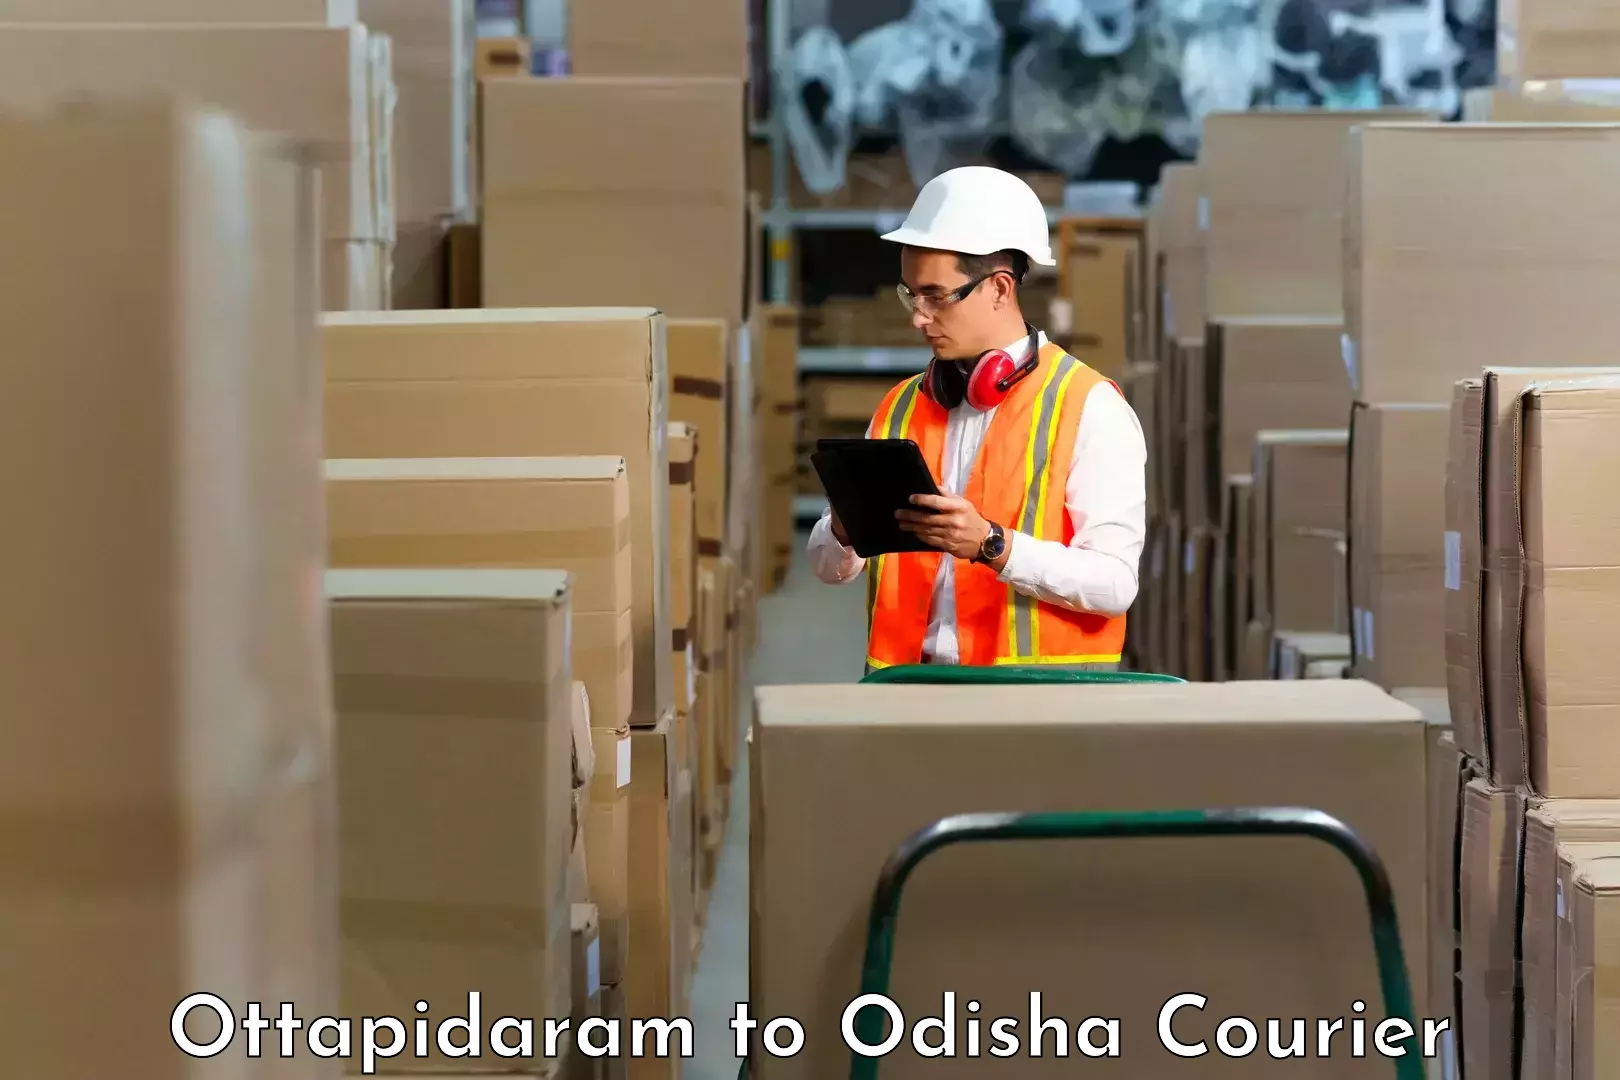 Reliable delivery network Ottapidaram to Konark